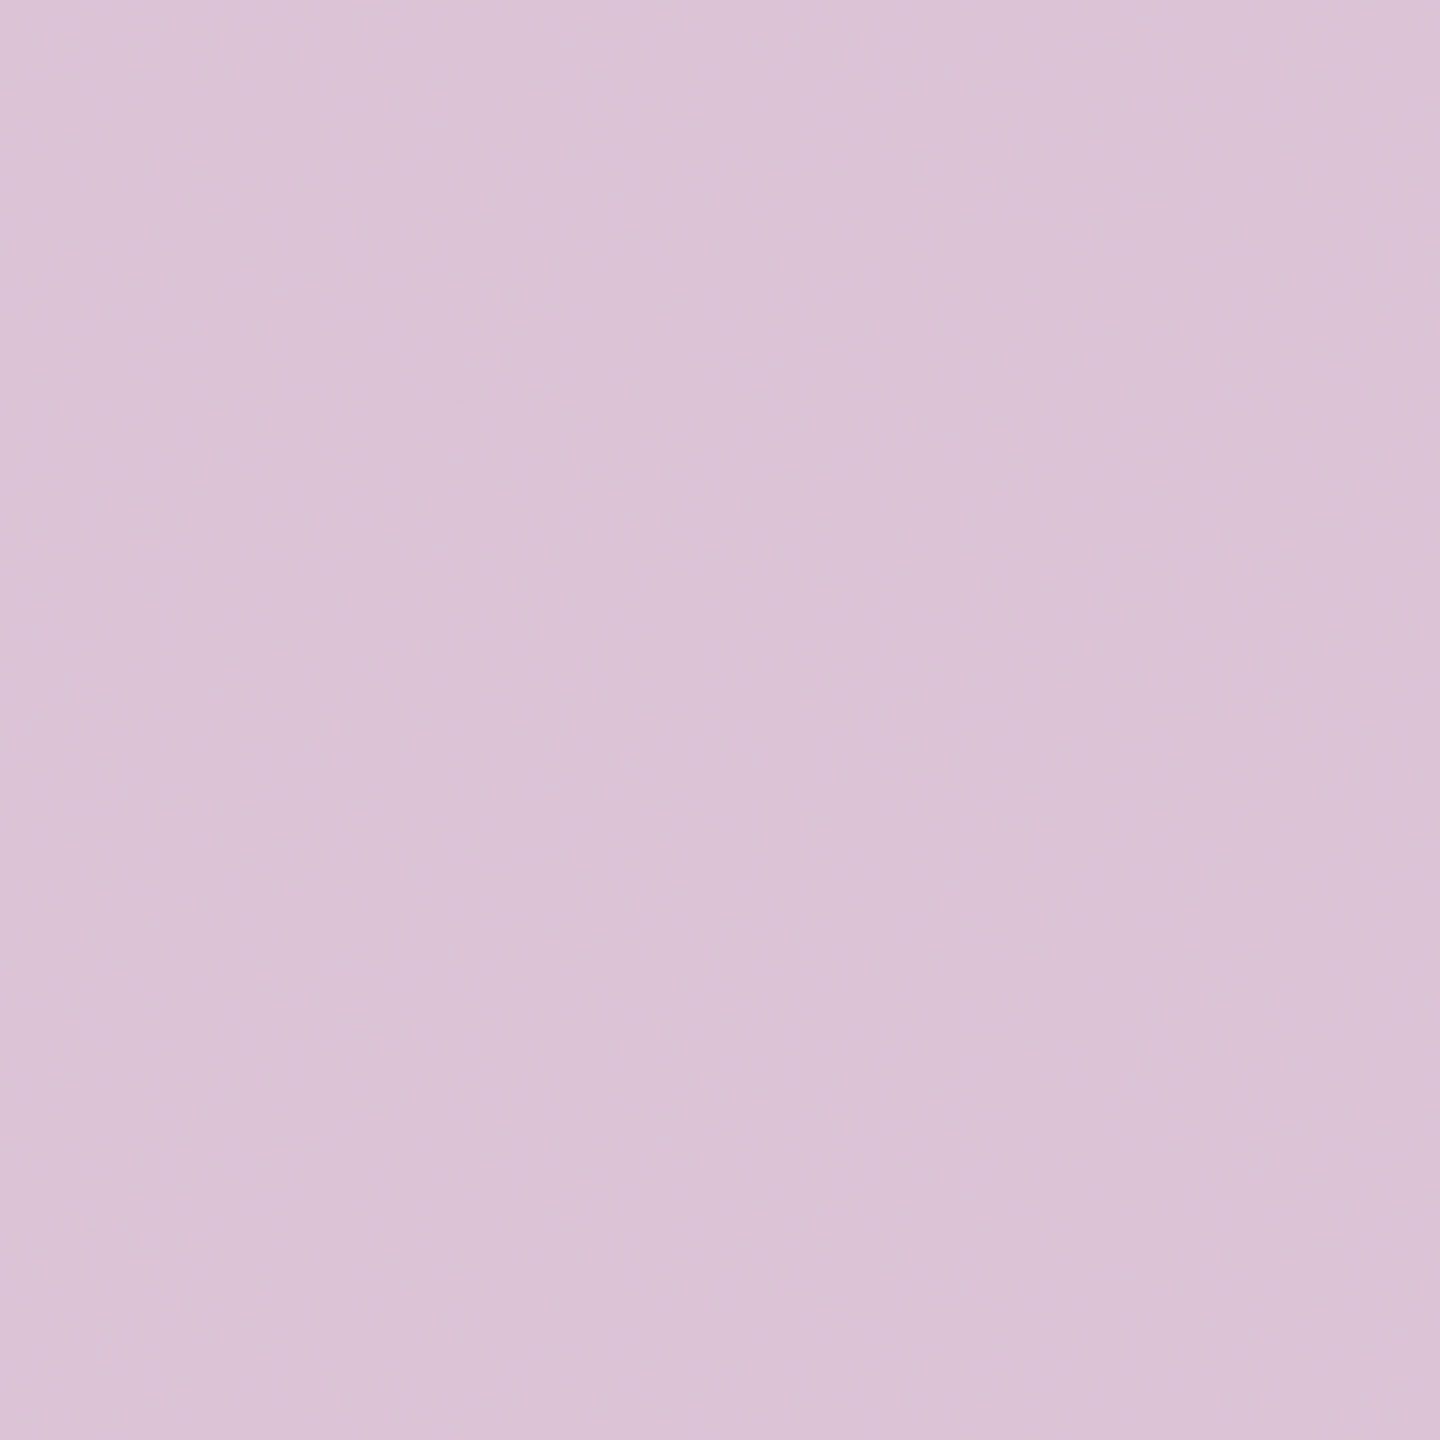 A light purple square with a white border - Pastel purple